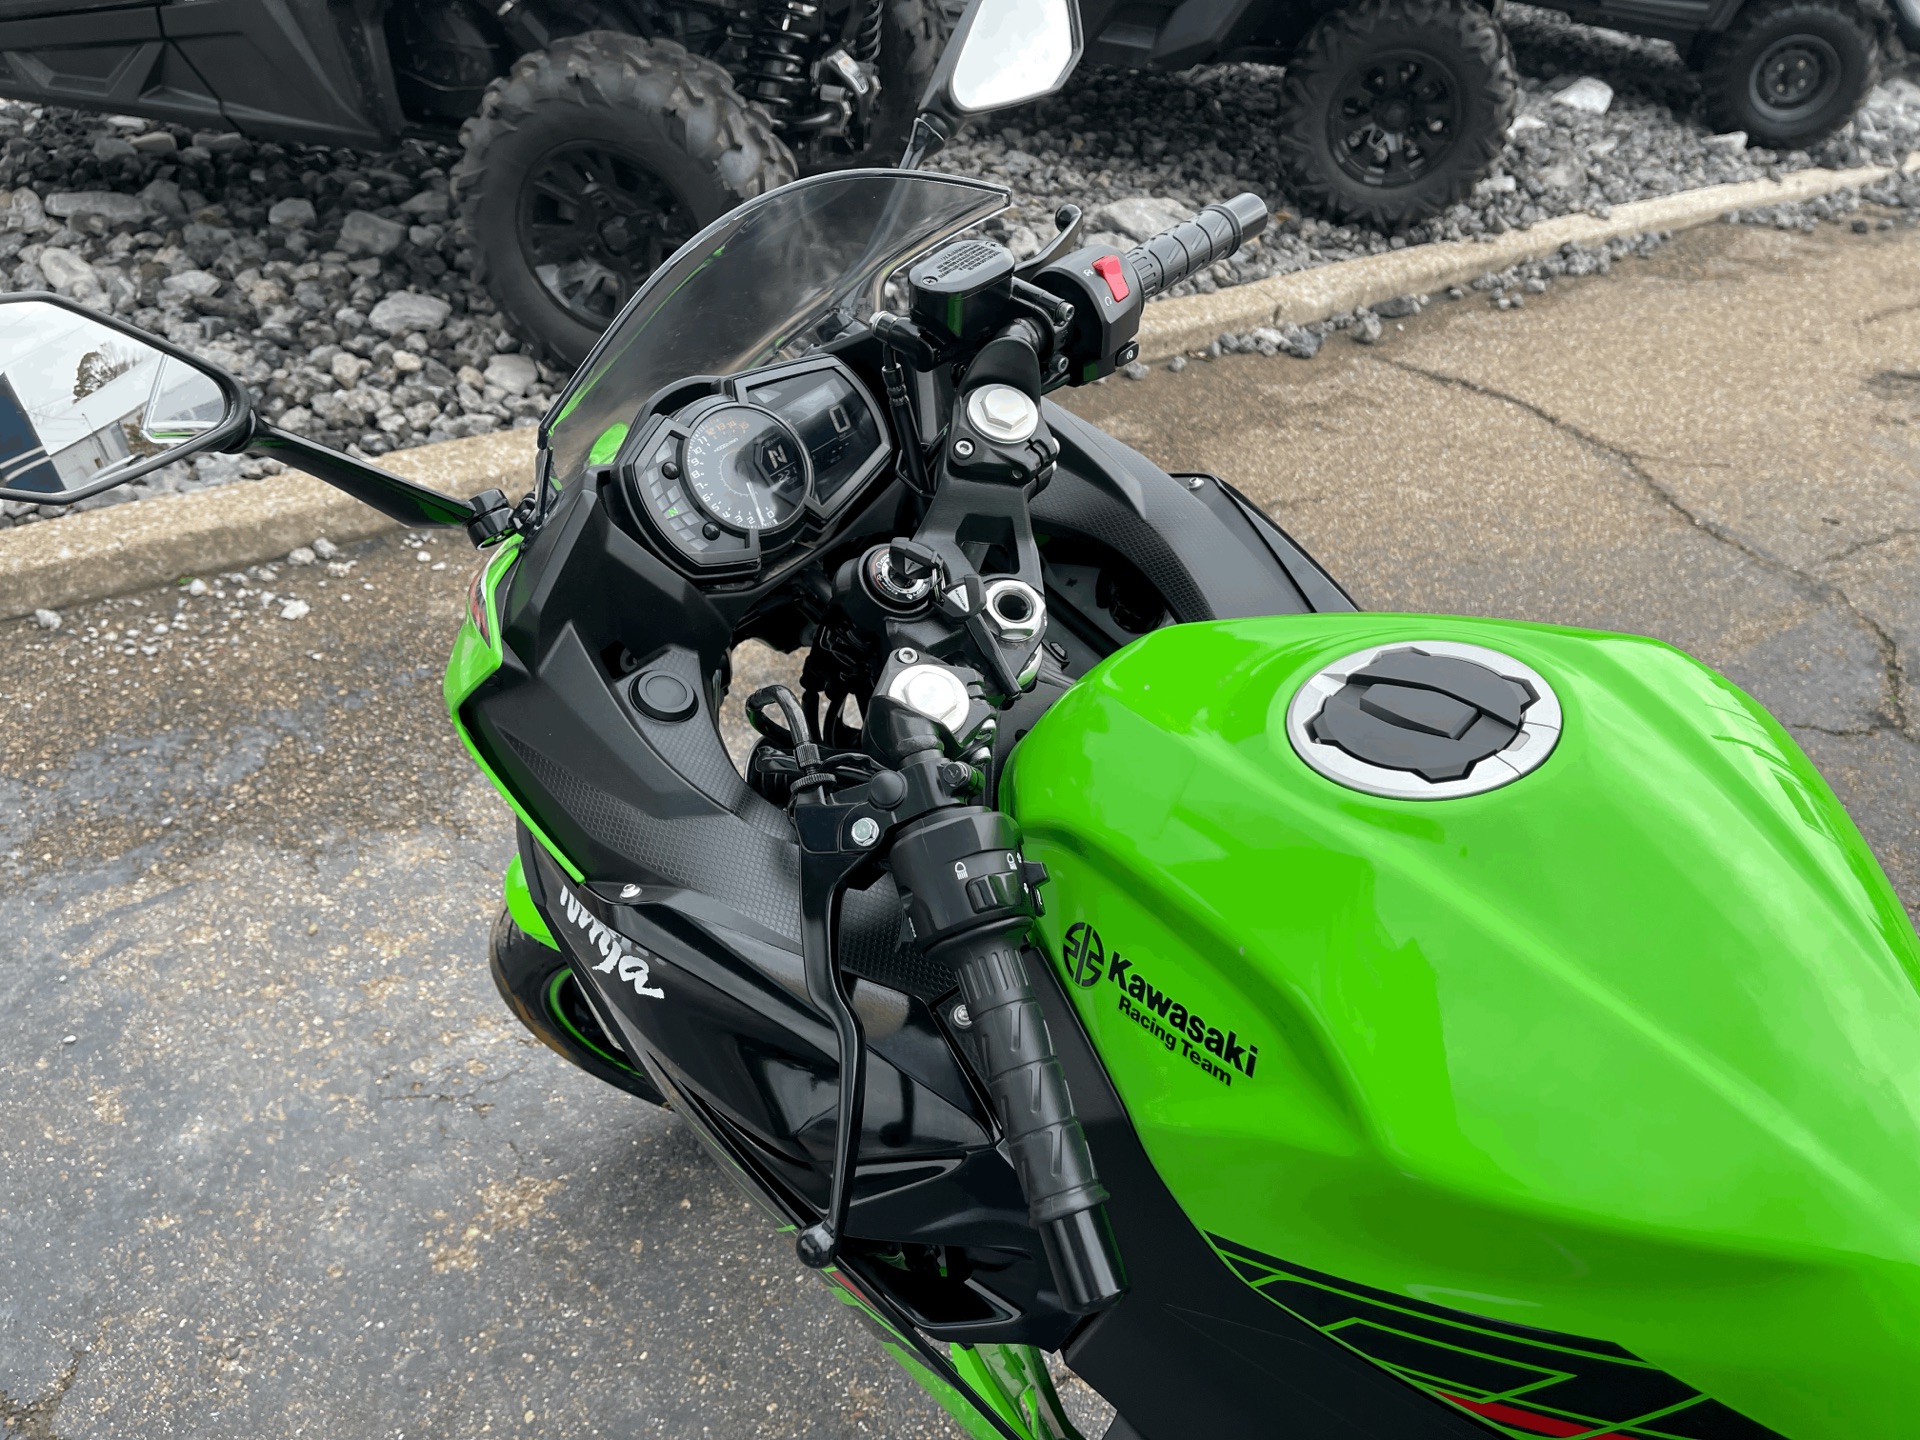 2023 Kawasaki Ninja 400 ABS KRT Edition in Dyersburg, Tennessee - Photo 12